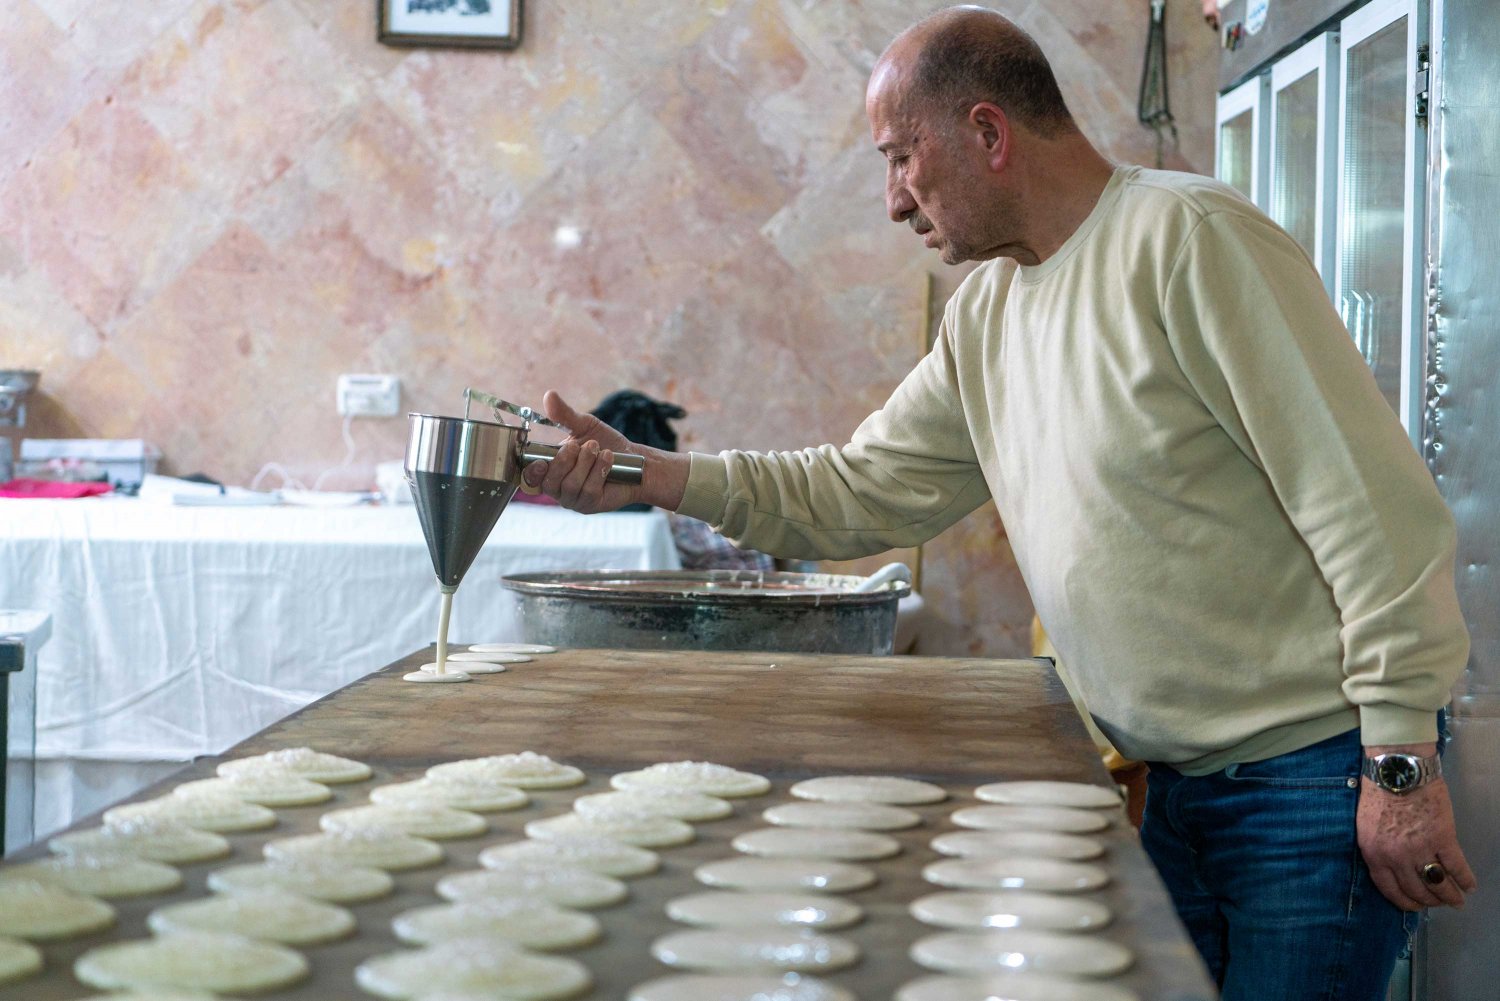 A Jerusalem Old City vendor prepares qatayef, a sweet pancake stuffed with cheese or walnuts, during Ramadan 2022